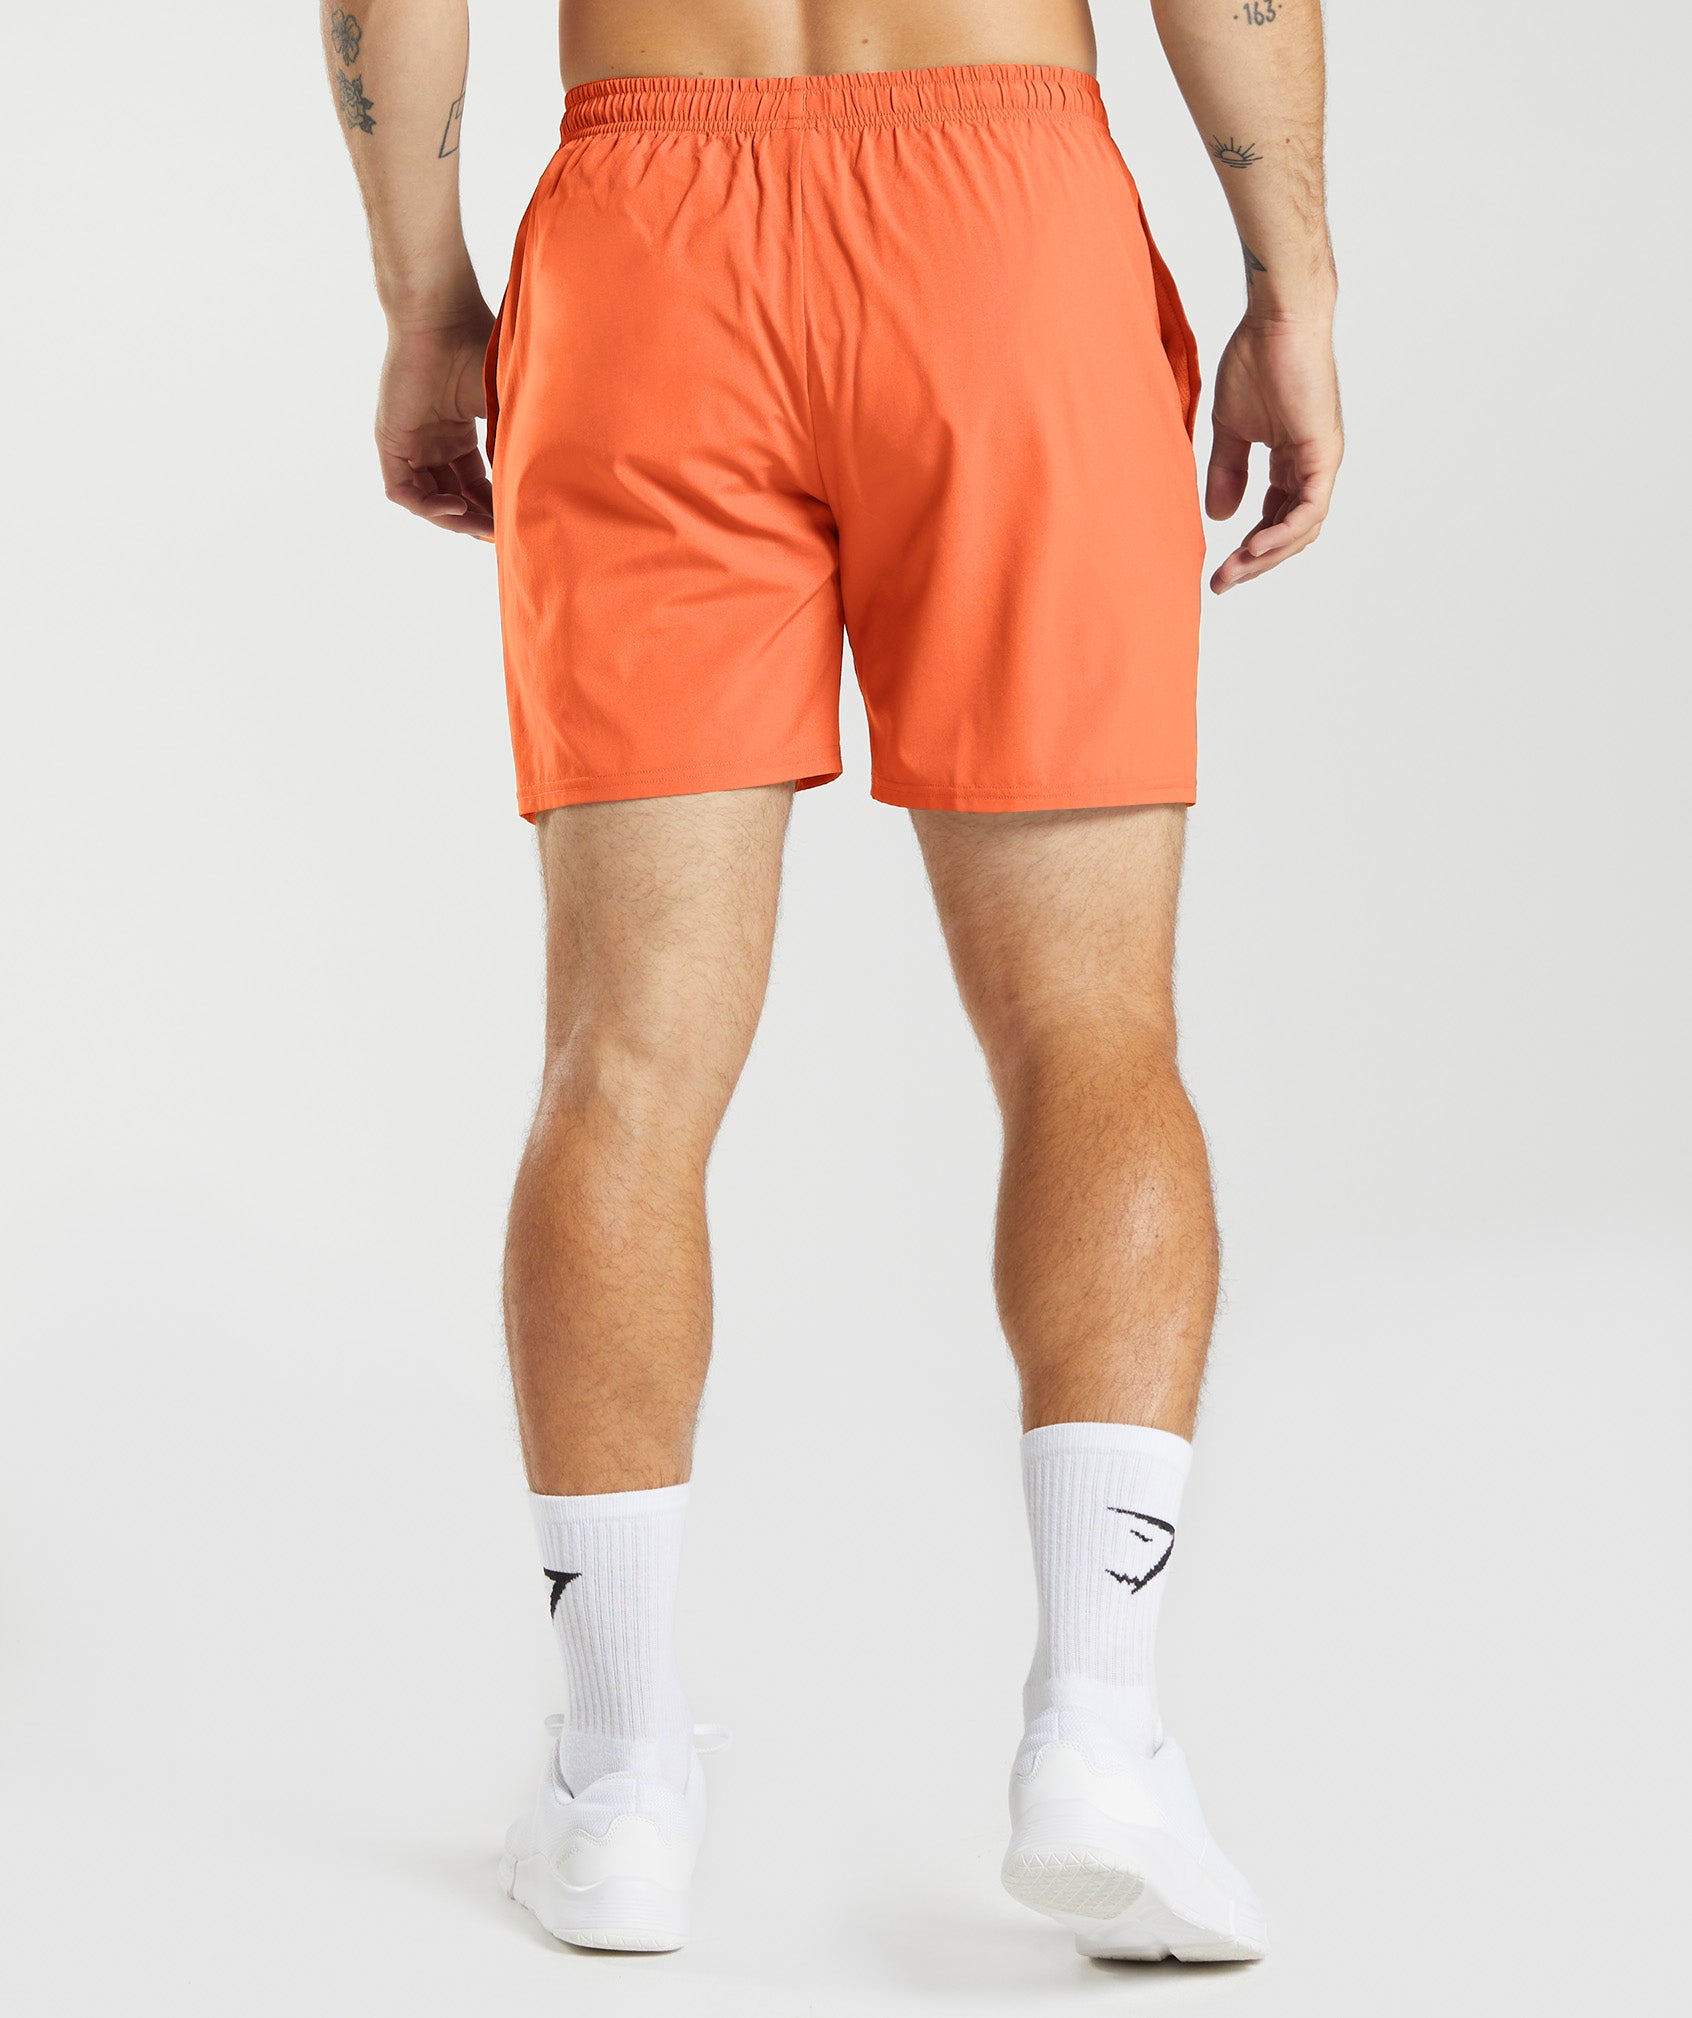 Arrival Shorts in Papaya Orange - view 2